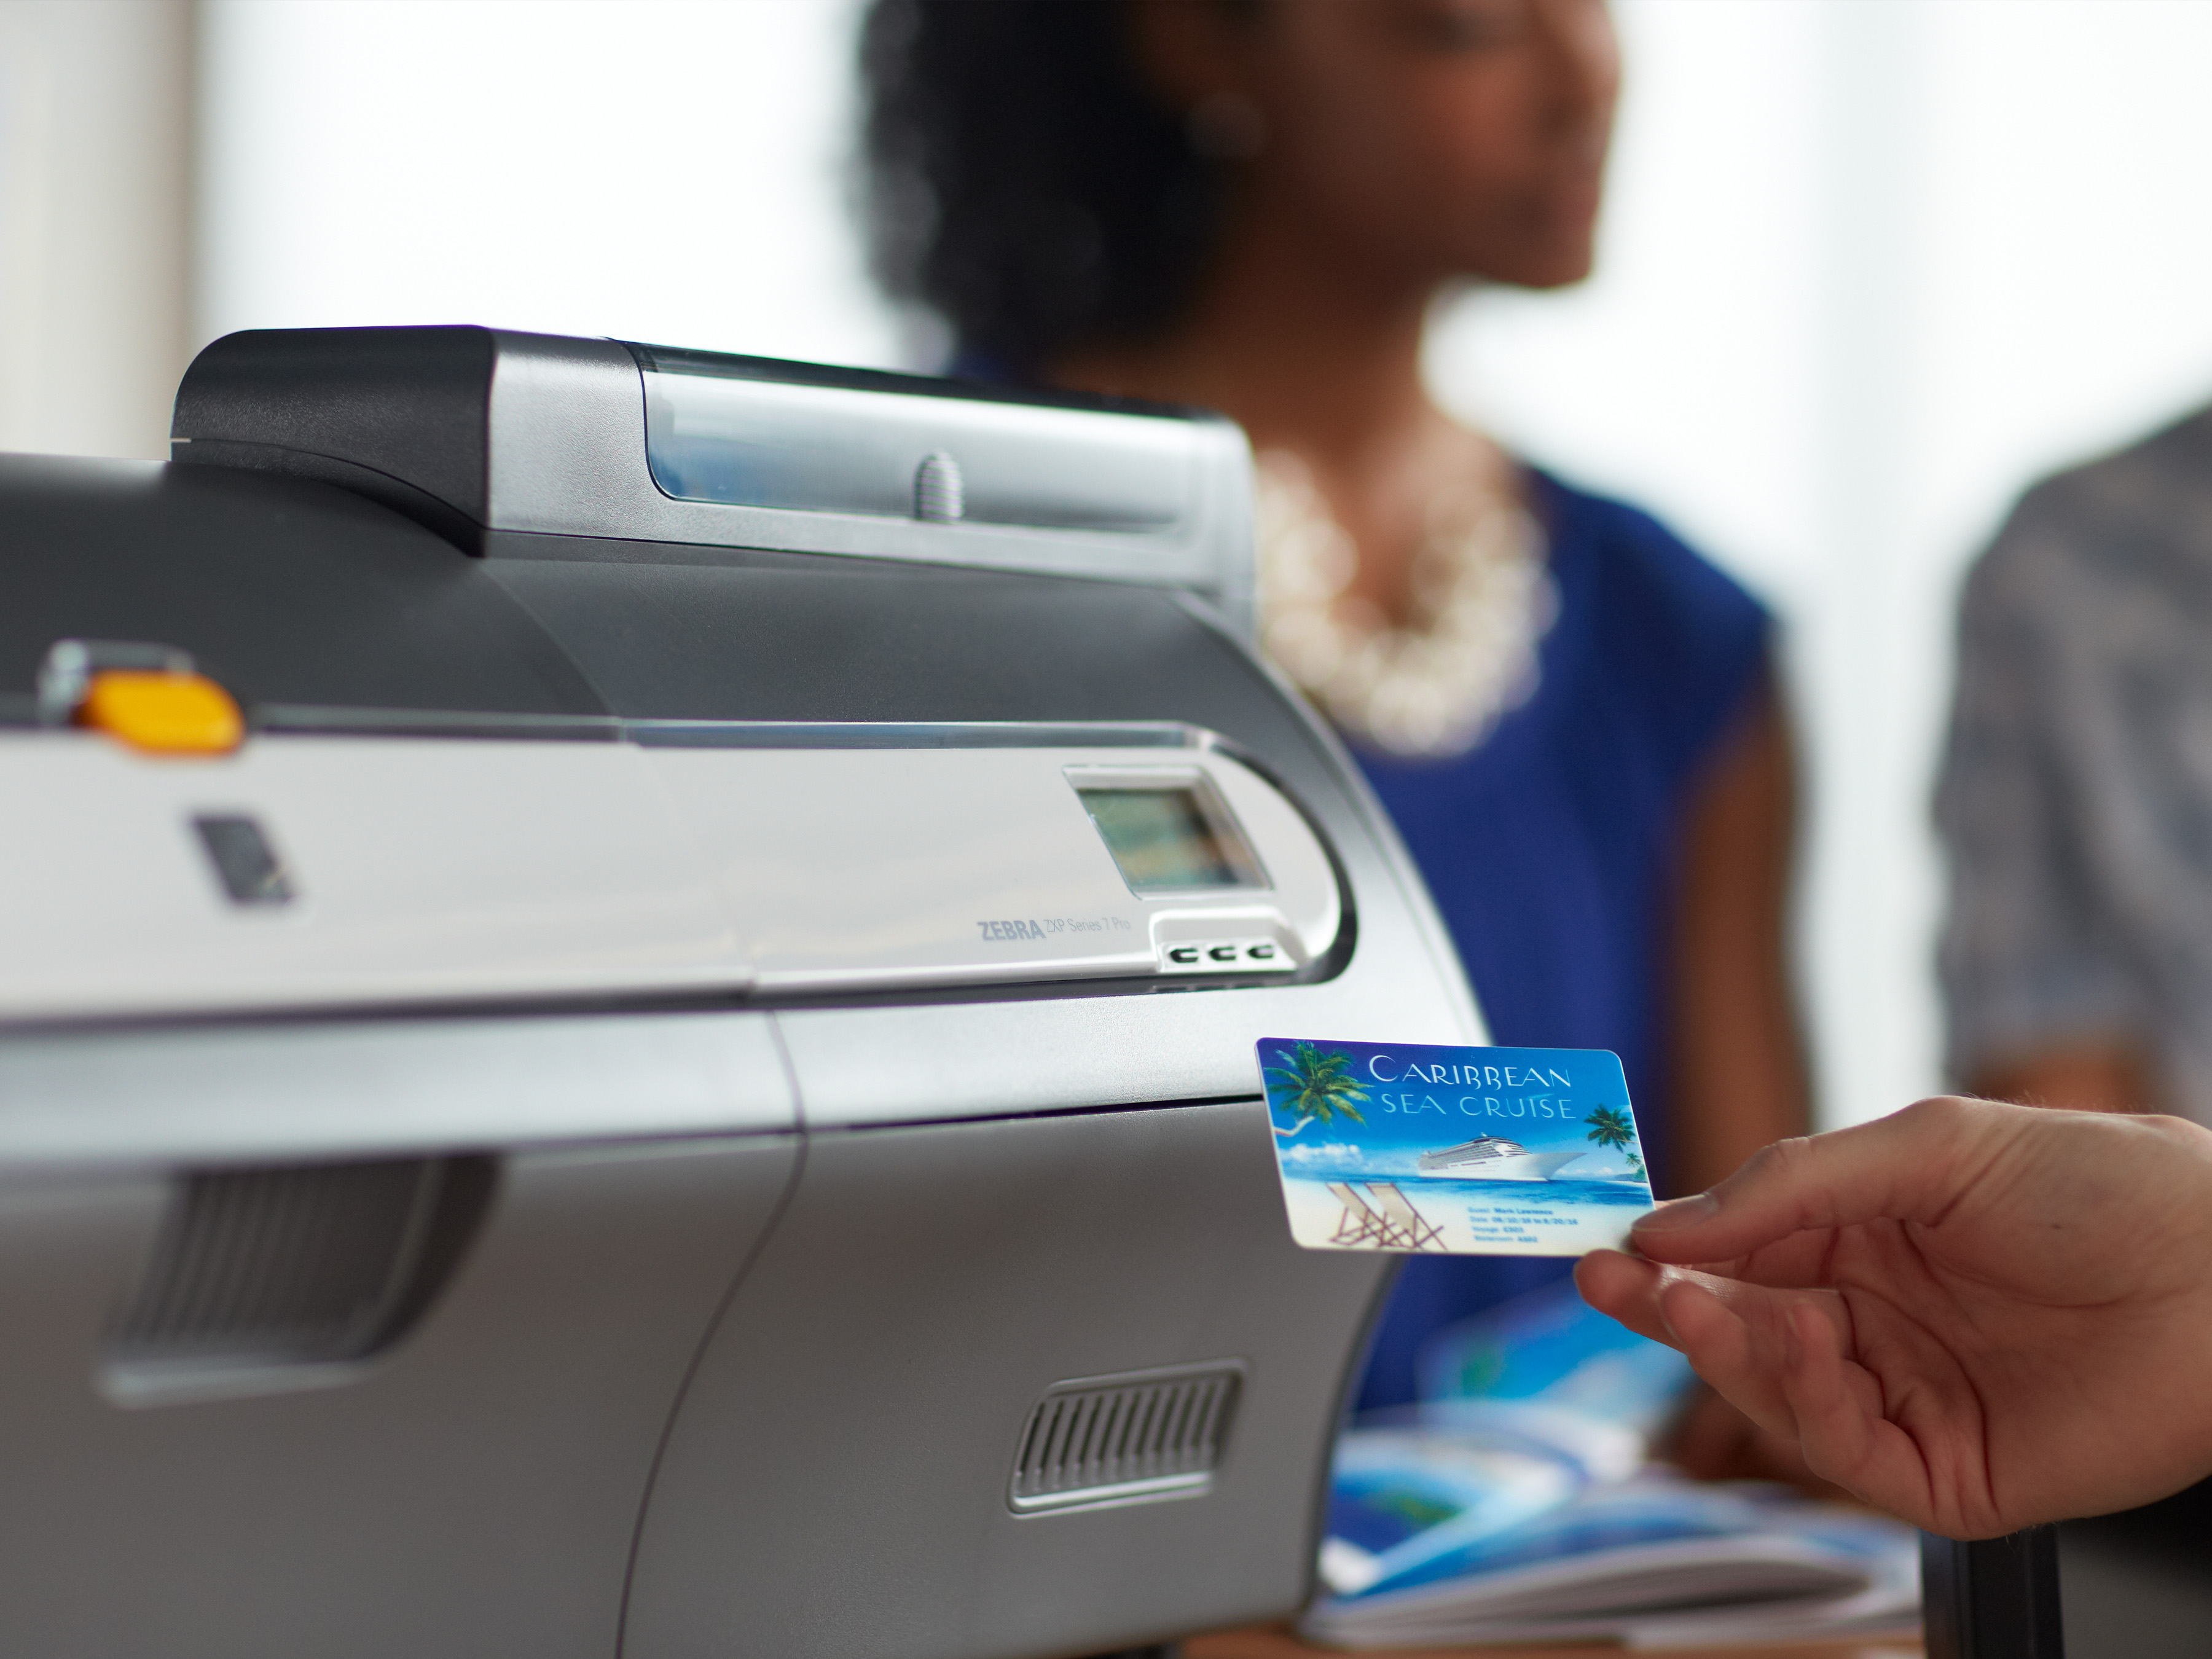 Zebra card printer prints out a Caribbean sea cruise onboard expense account card